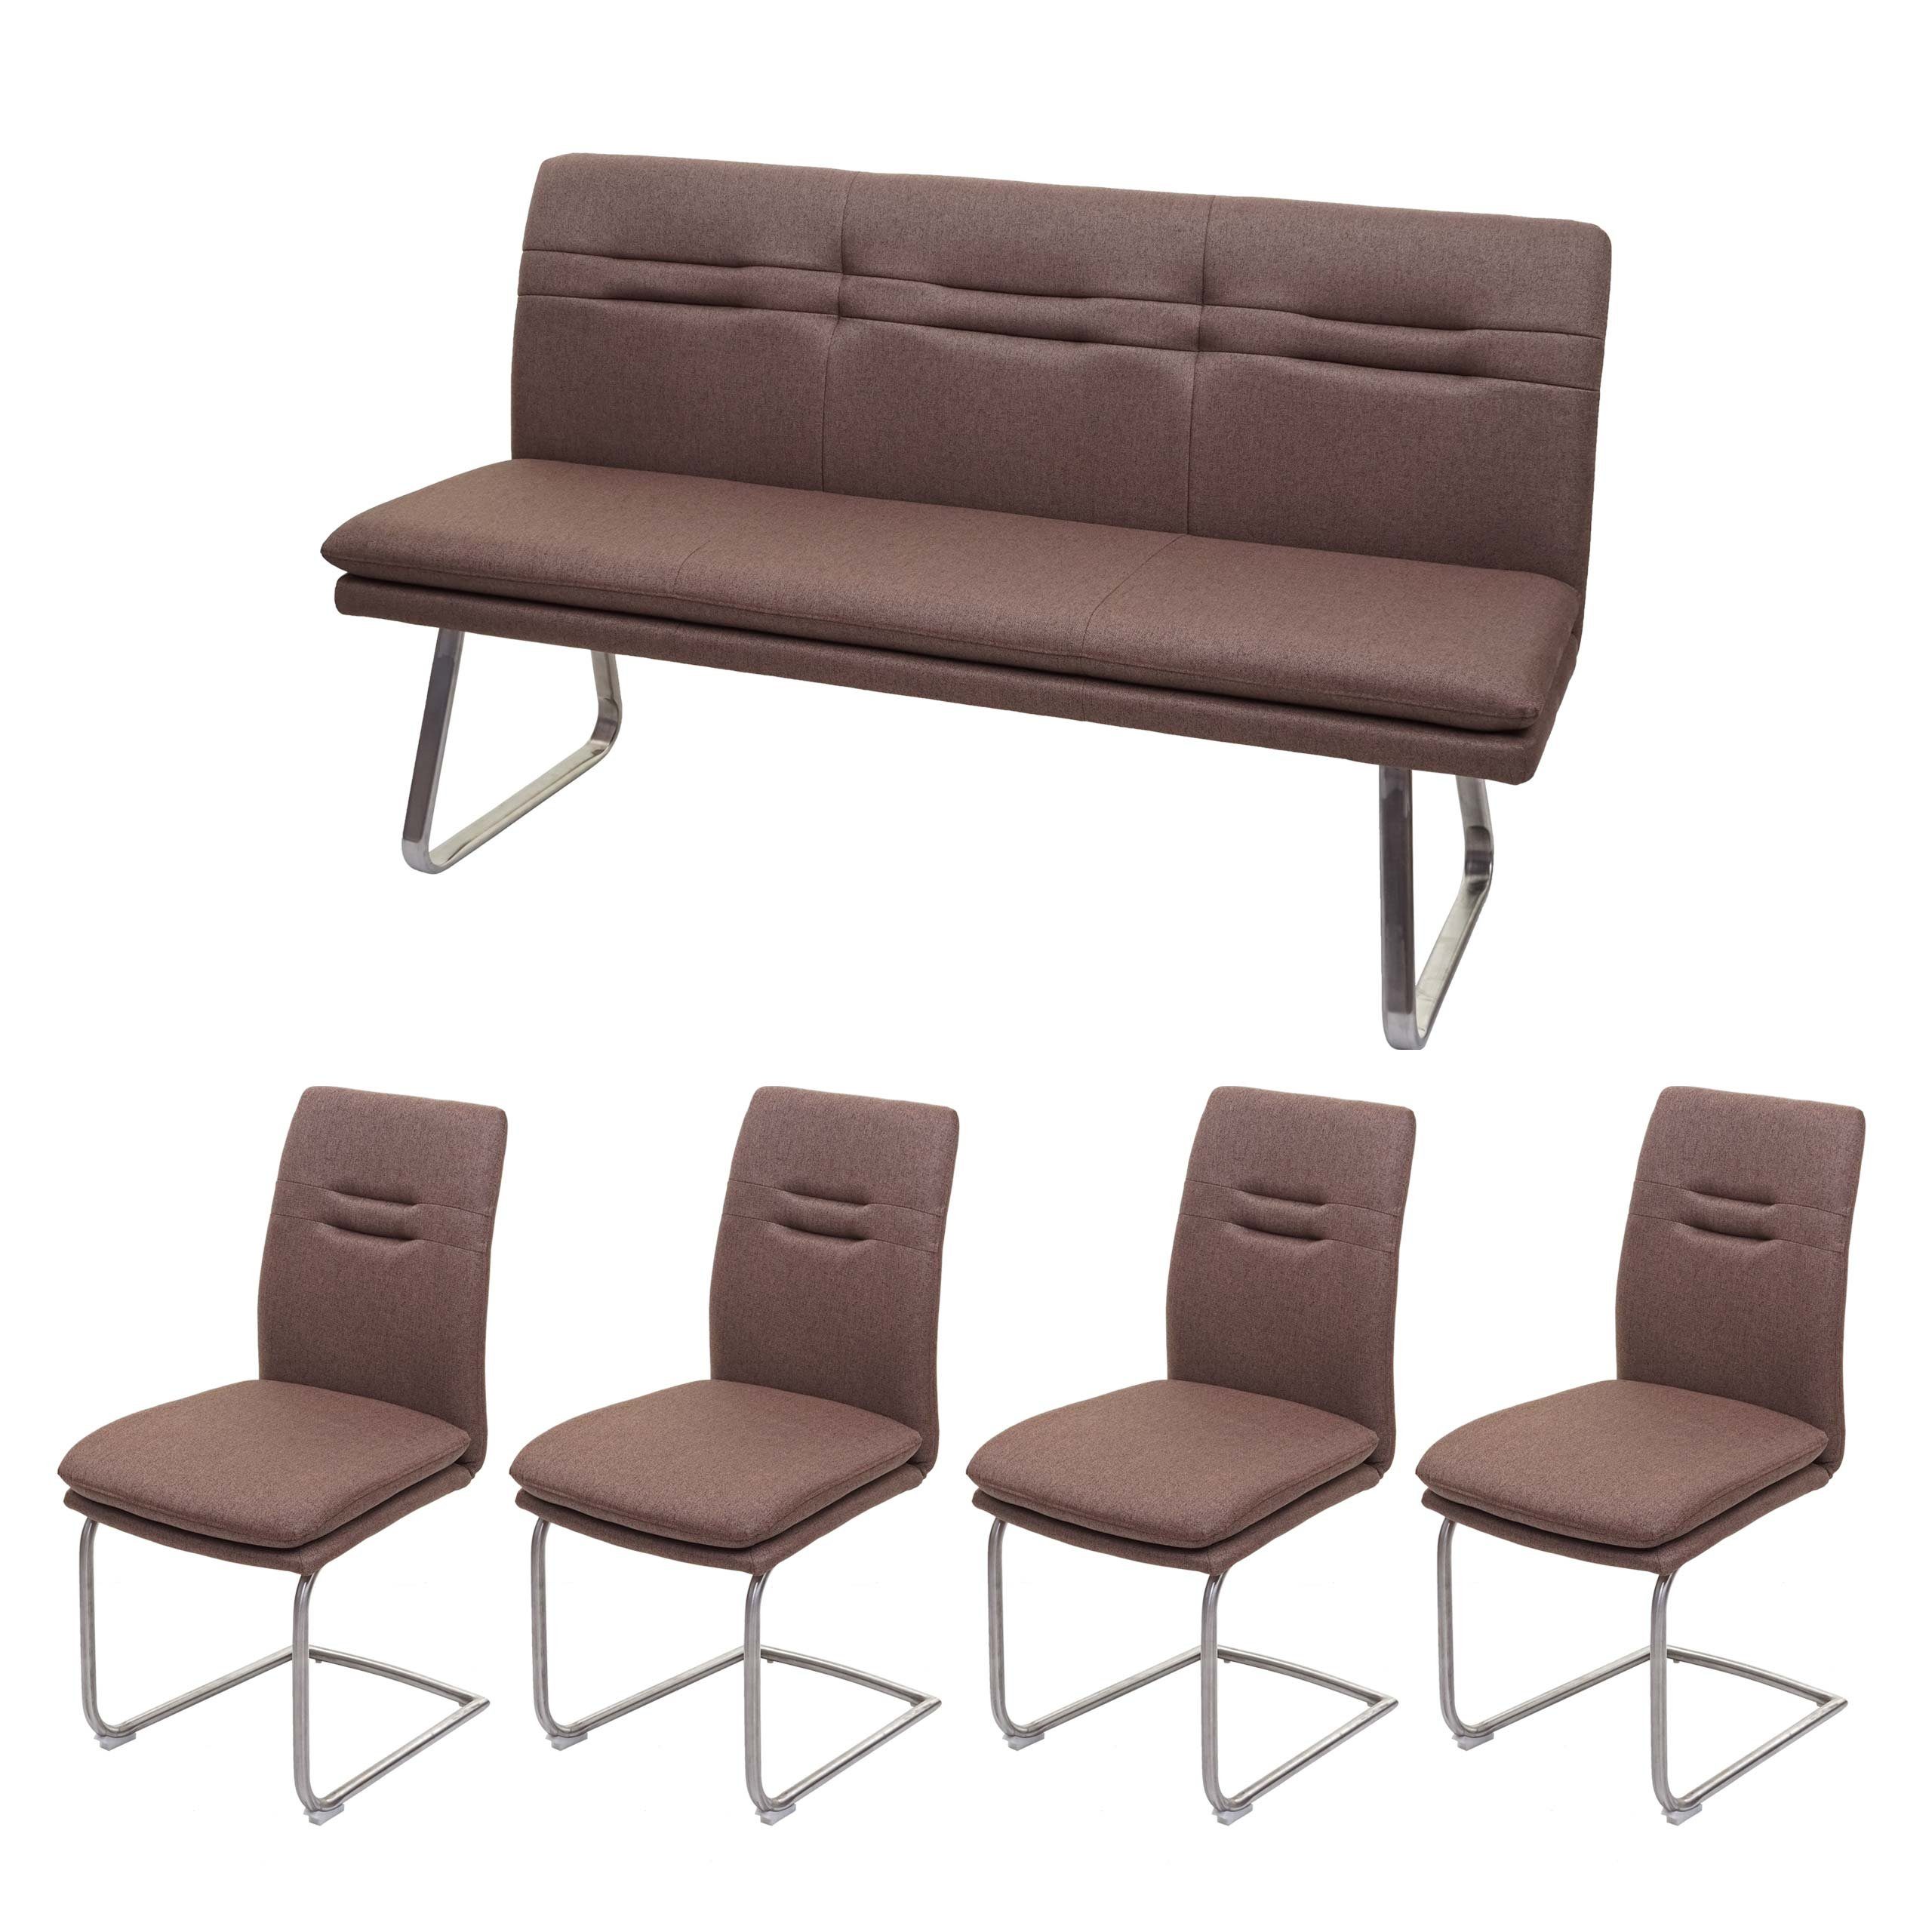 MCW Essgruppe MCW-H70-B, (Set, 5-tlg., 4 Stühle, 1 Tisch, 1 Bank), Bequeme Formgebung, Stabiles Gestell braun | Essgruppen